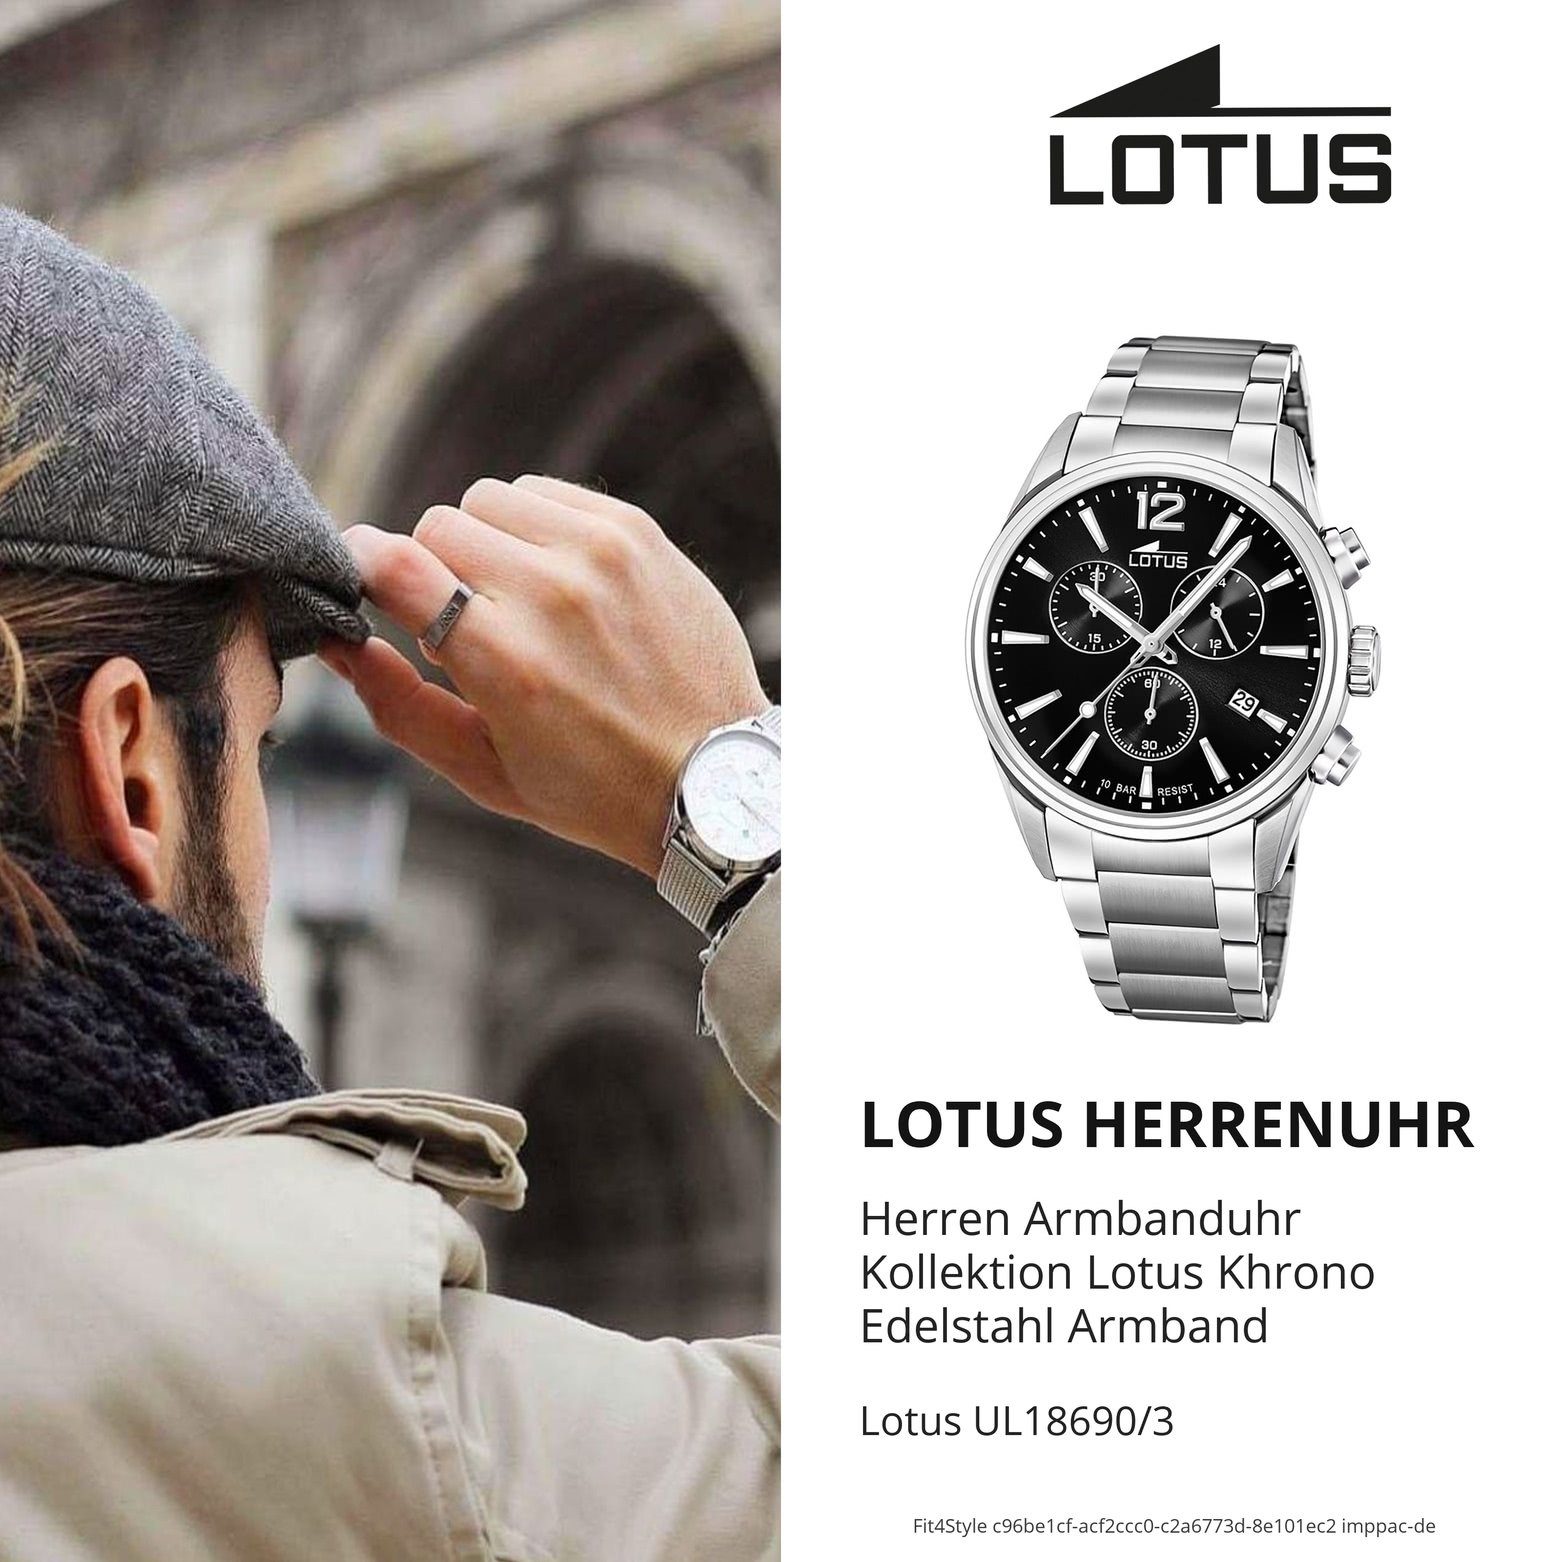 Edelstahl, Uhr rund, silber 18690/3 Lotus Sport (ca. Edelstahlarmband groß 42mm) Quarzuhr Herren LOTUS Herrenuhr